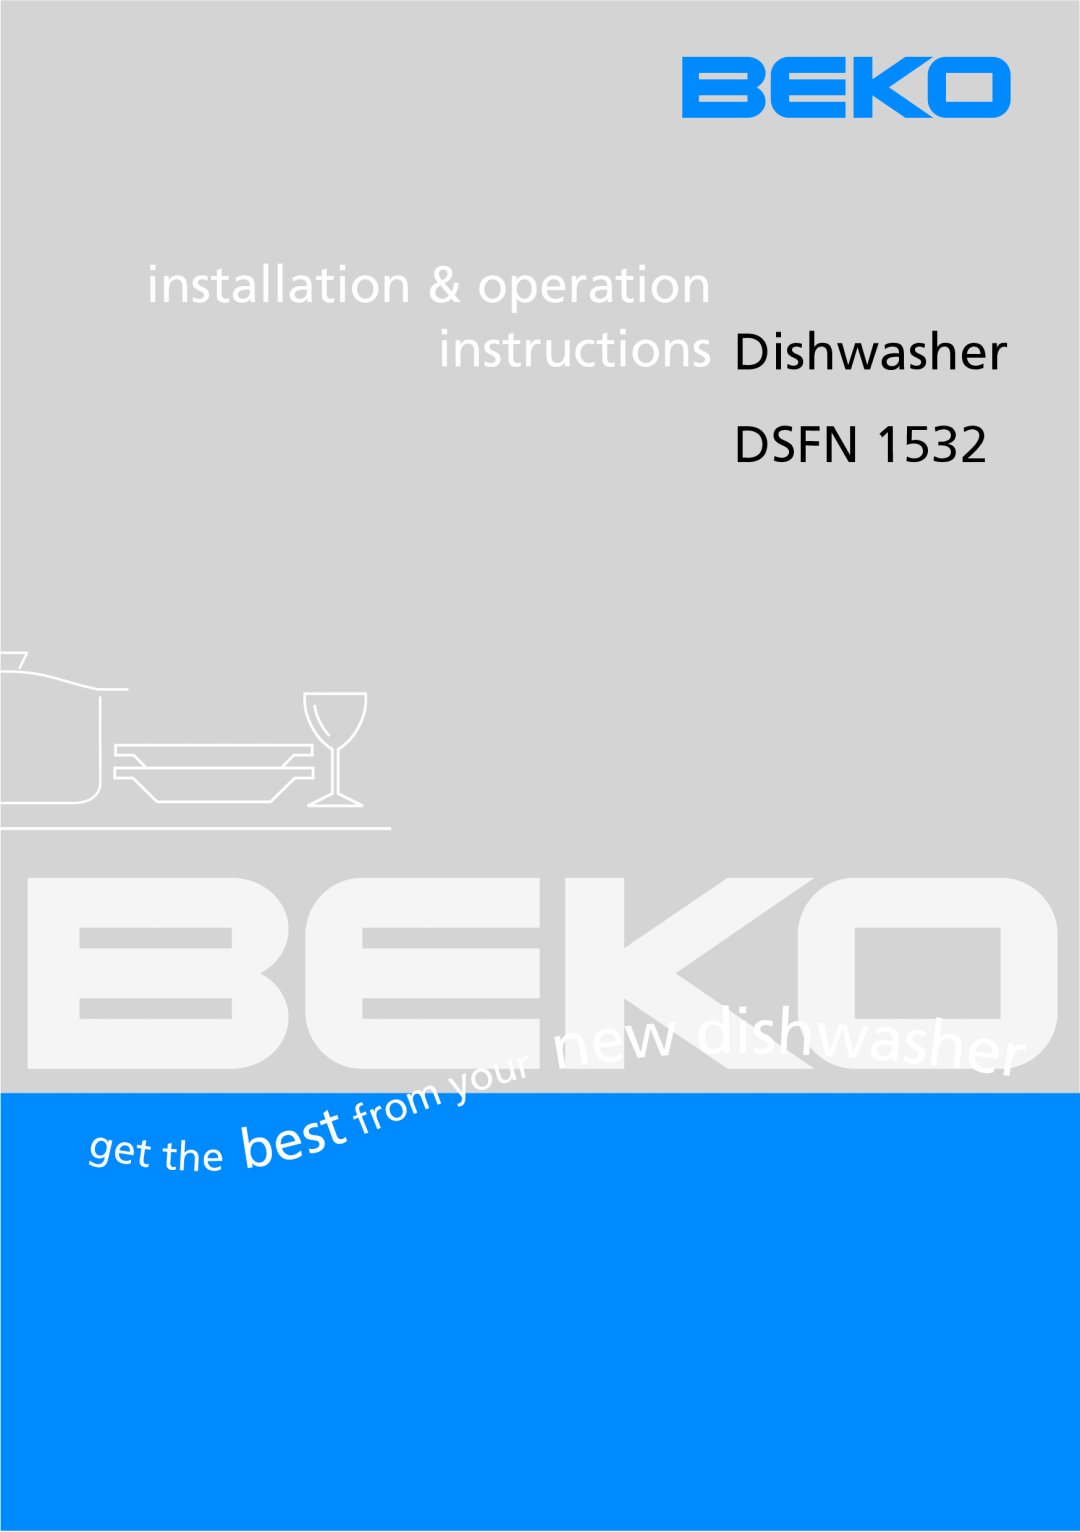 Beko DSFN 1532 manual Dishwasher, Dsfn 